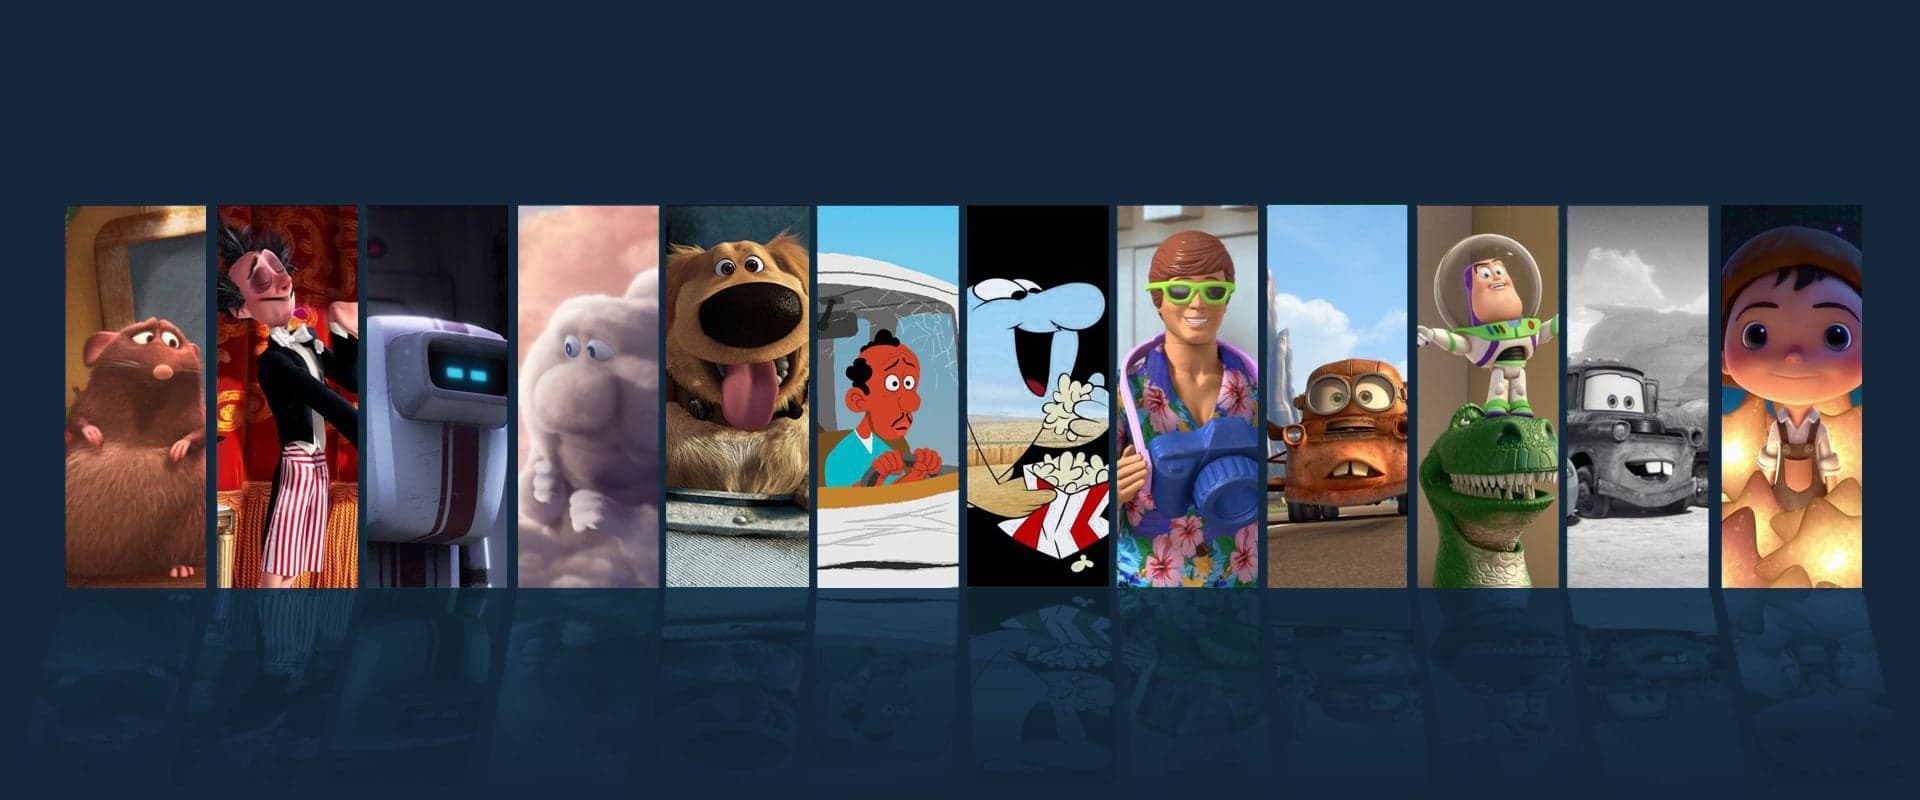 Pixar Short Films Collection: Volume 2